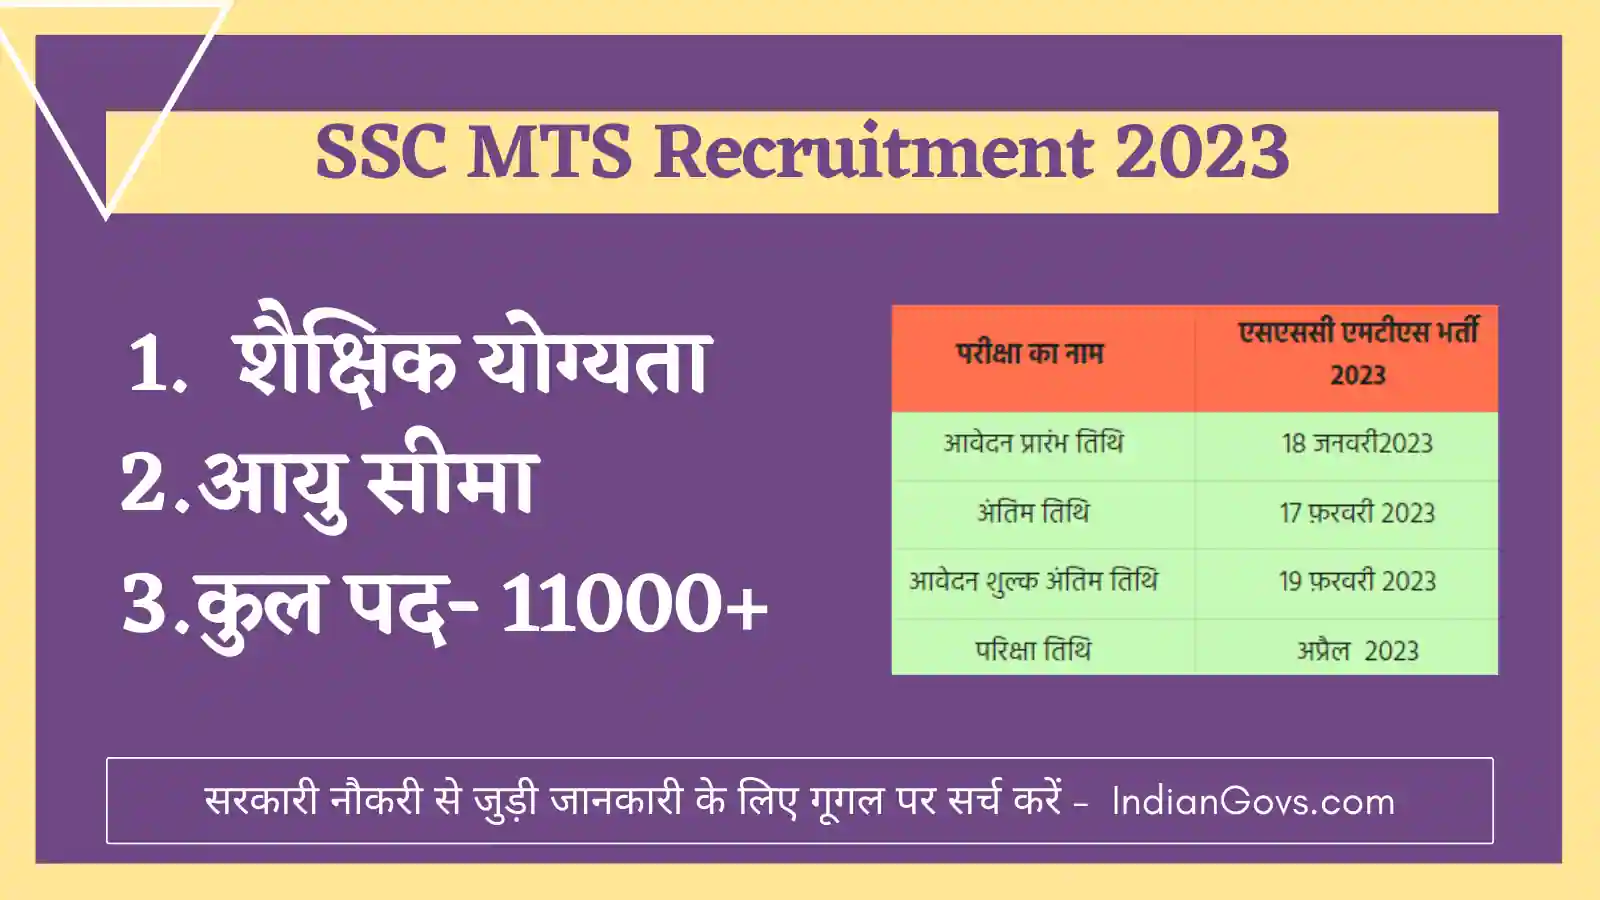 SSC MTS Recruitment 2023 in Hindi